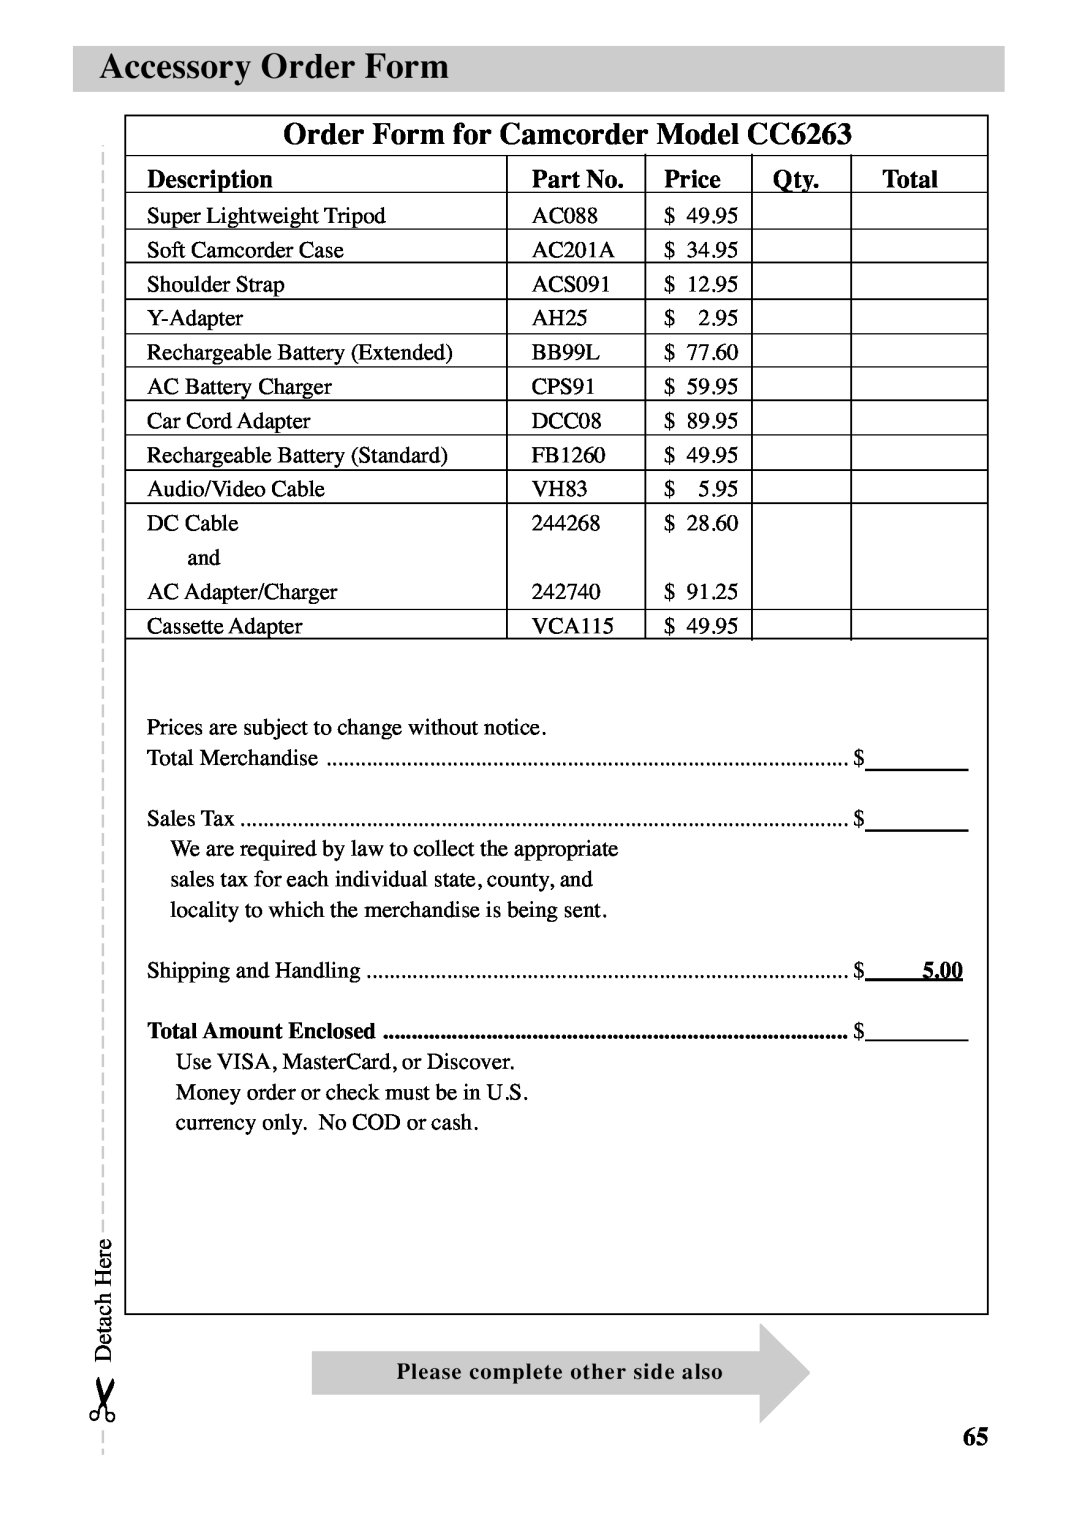 RCA manual Accessory Order Form, Order Form for Camcorder Model CC6263, Description, Price, Total, 5.00 